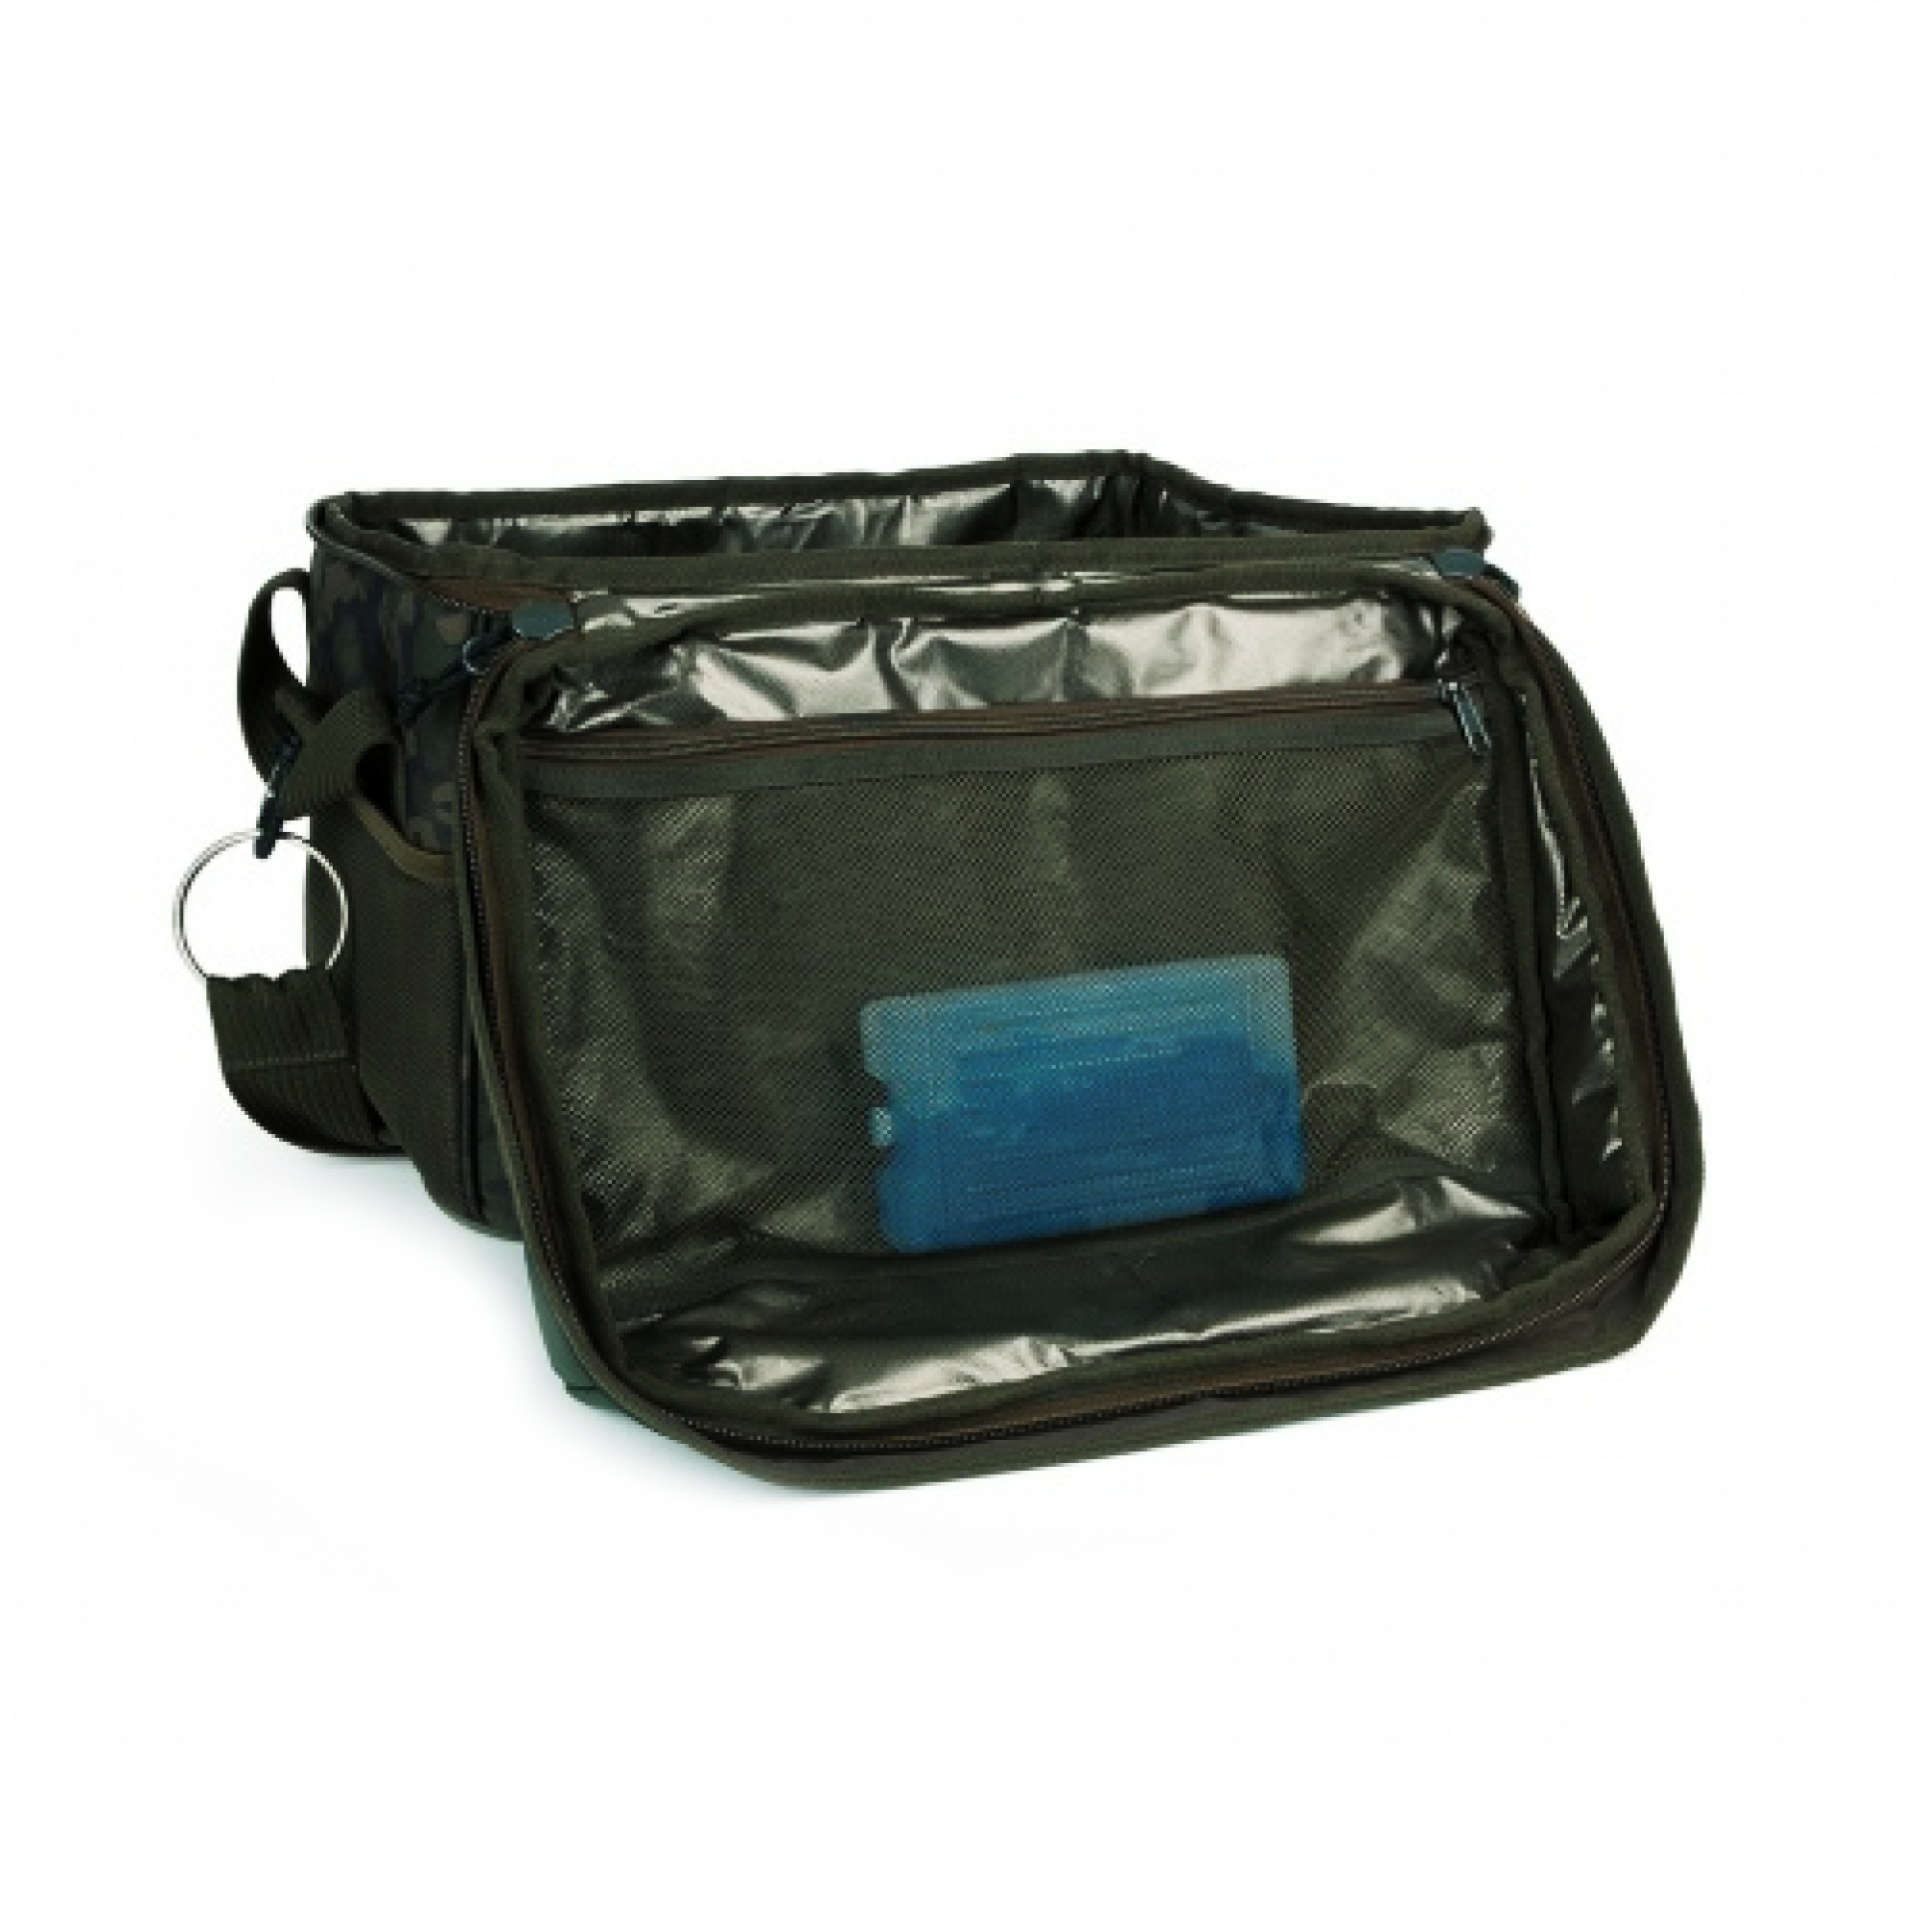 Shimano Tribal Trench Cooler Bag